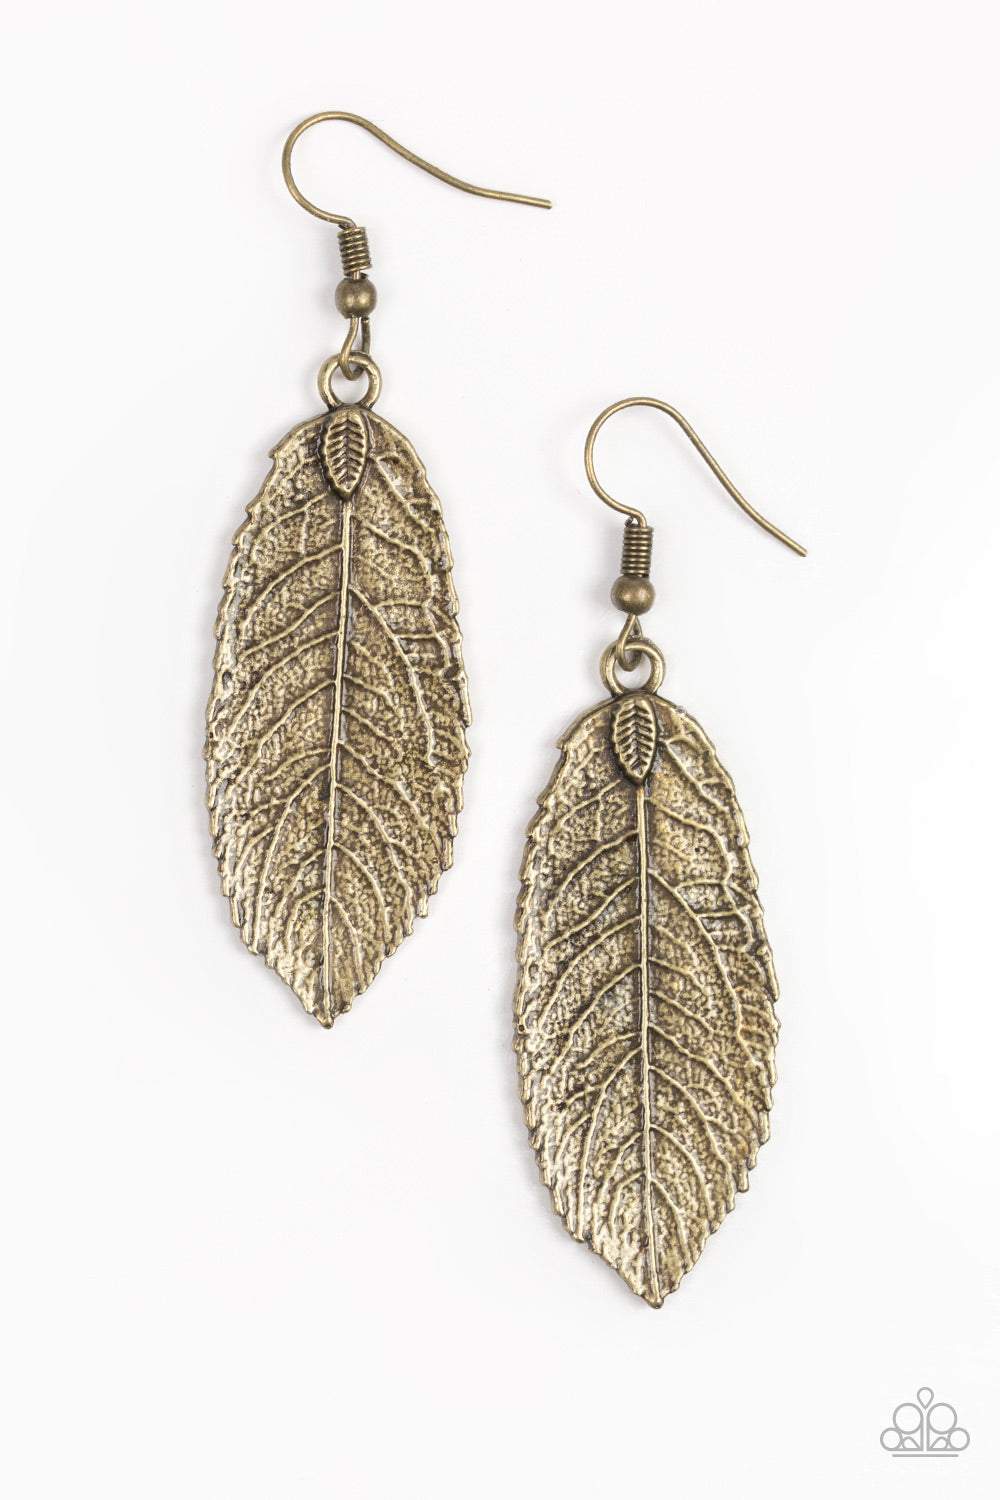 Paparazzi We GATHERER Together - Brass - Leaf Earrings - $5 Jewelry With Ashley Swint